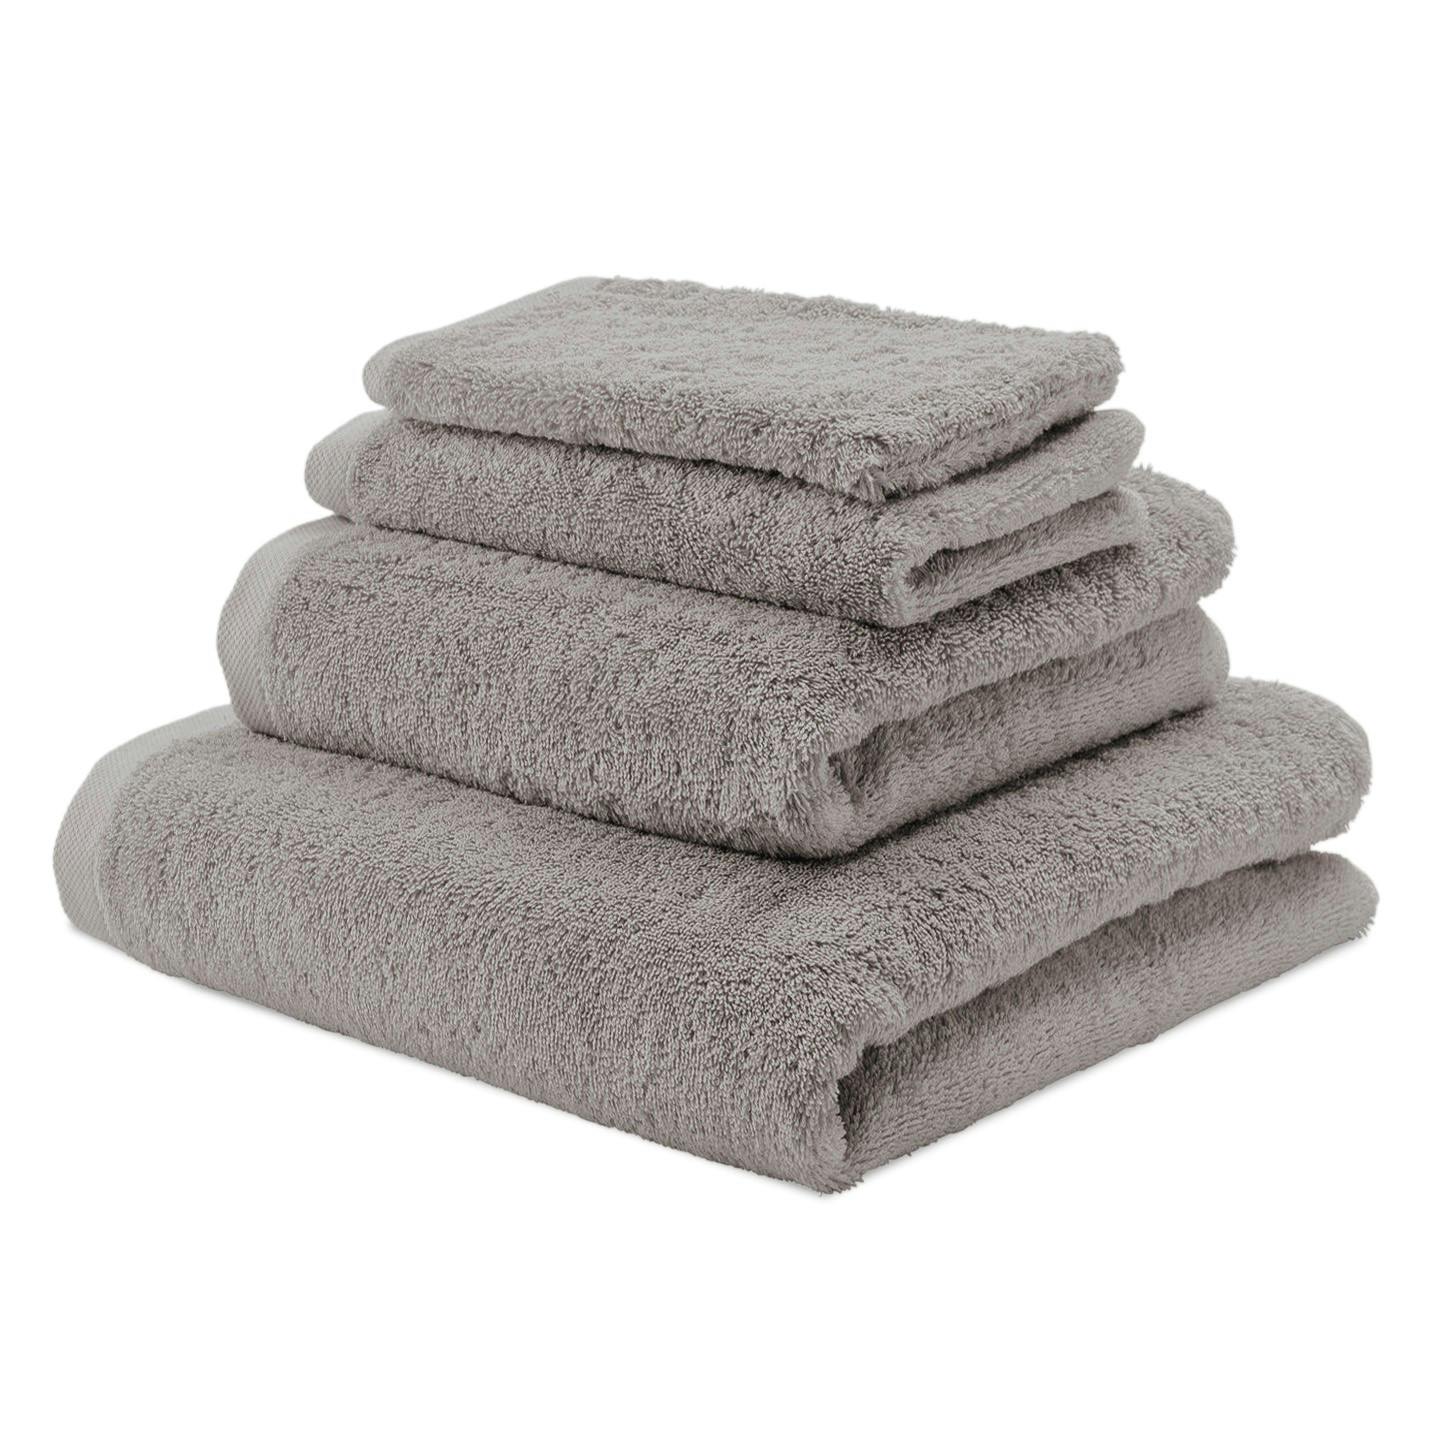 Juego de toallas Gris claro 100% algodón orgánico de 700 gramos